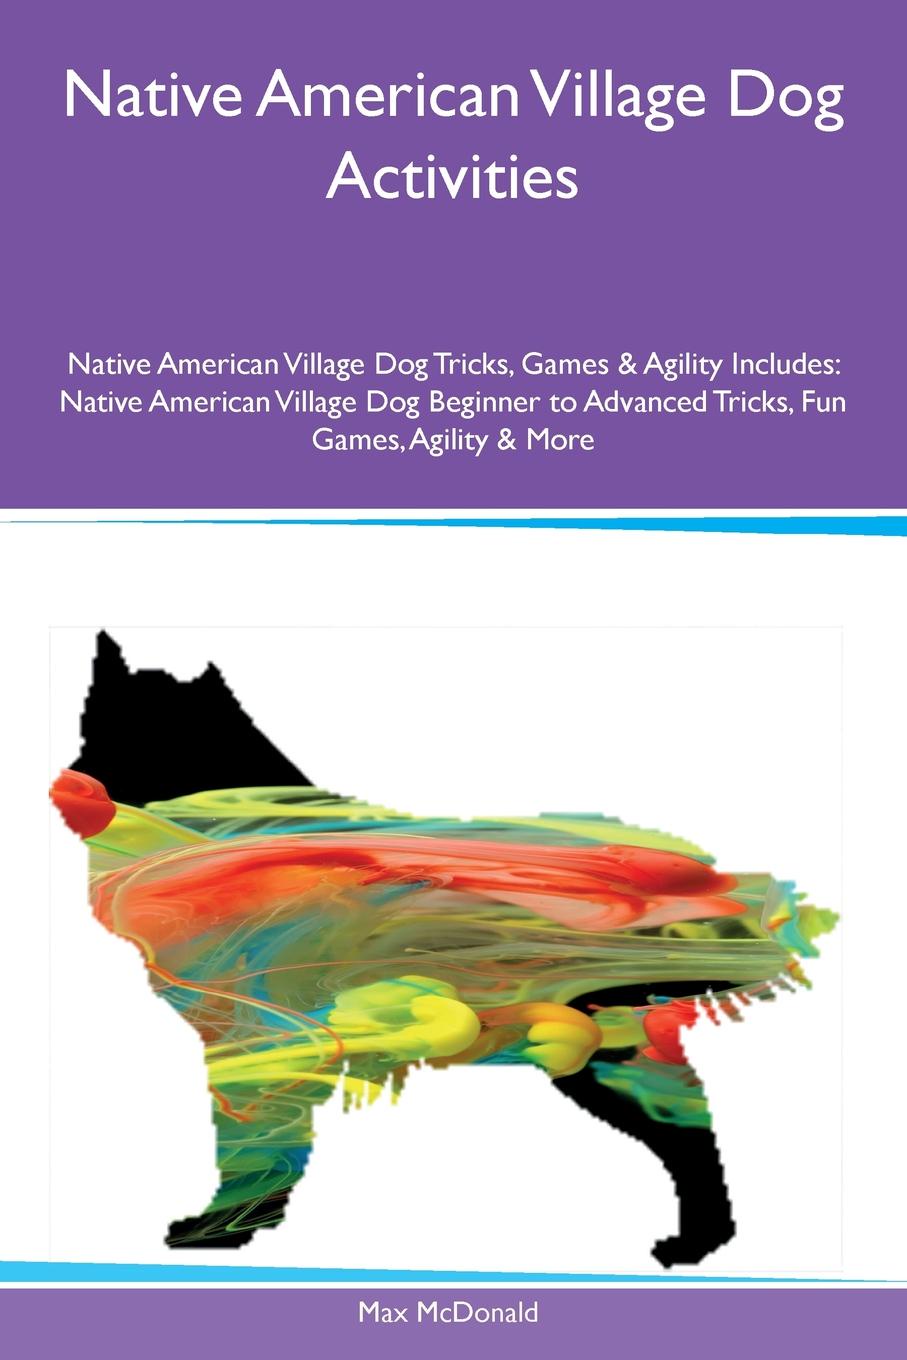 Native American Village Dog Activities Native American Village Dog Tricks, Games & Agility Includes. Native American Village Dog Beginner to Advanced Tricks, Fun Games, Agility & More